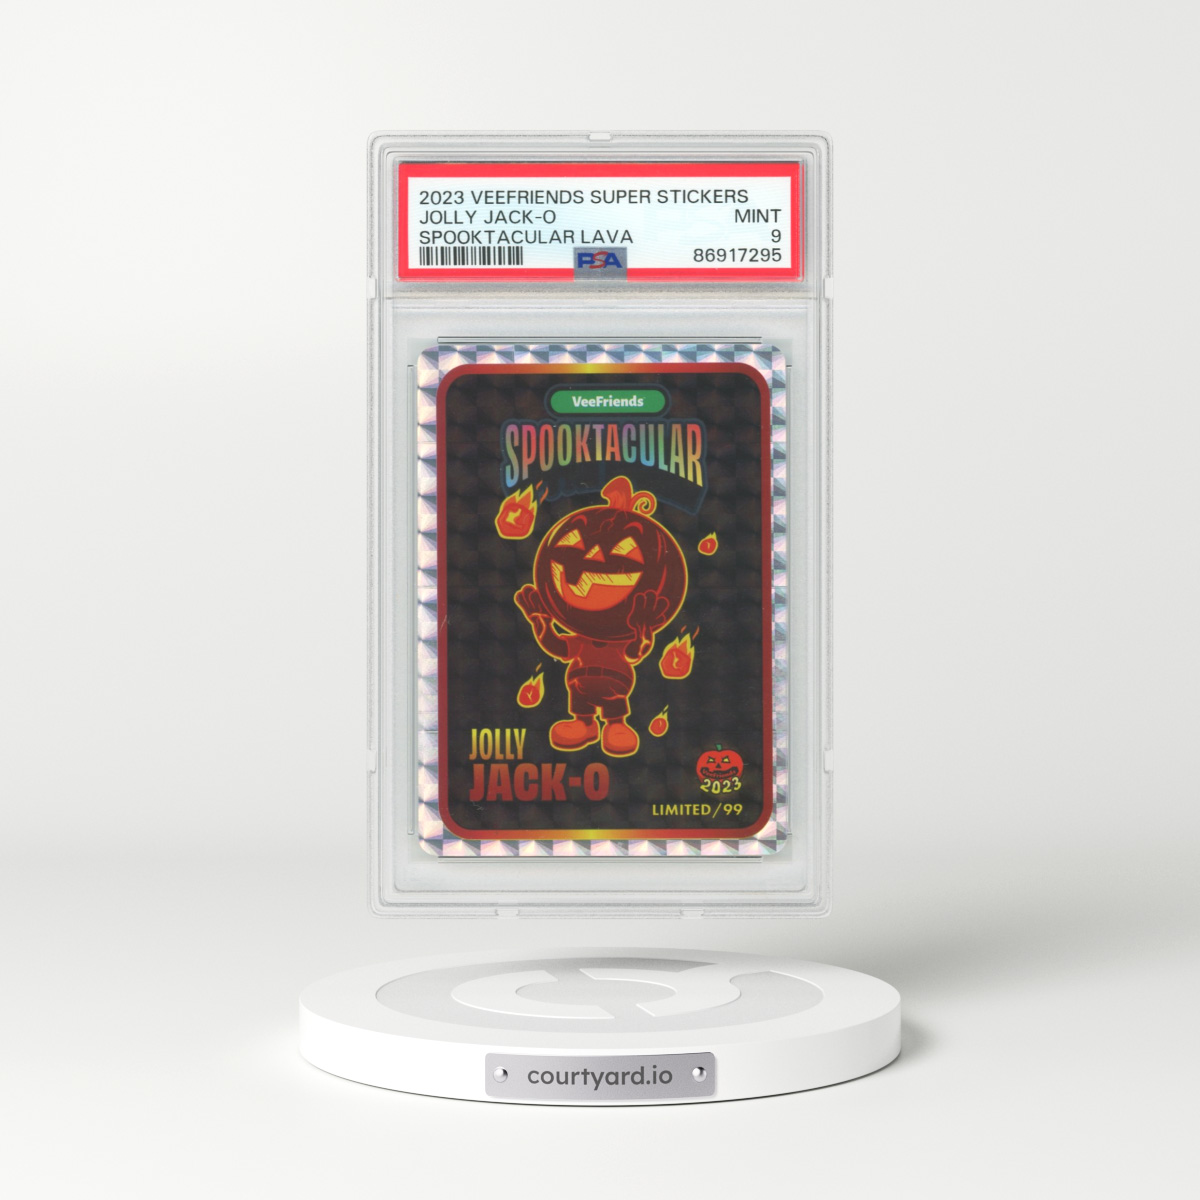 2023 Veefriends Super Stickers Jolly Jack-o - Spooktacular Lava (PSA 9 MINT)